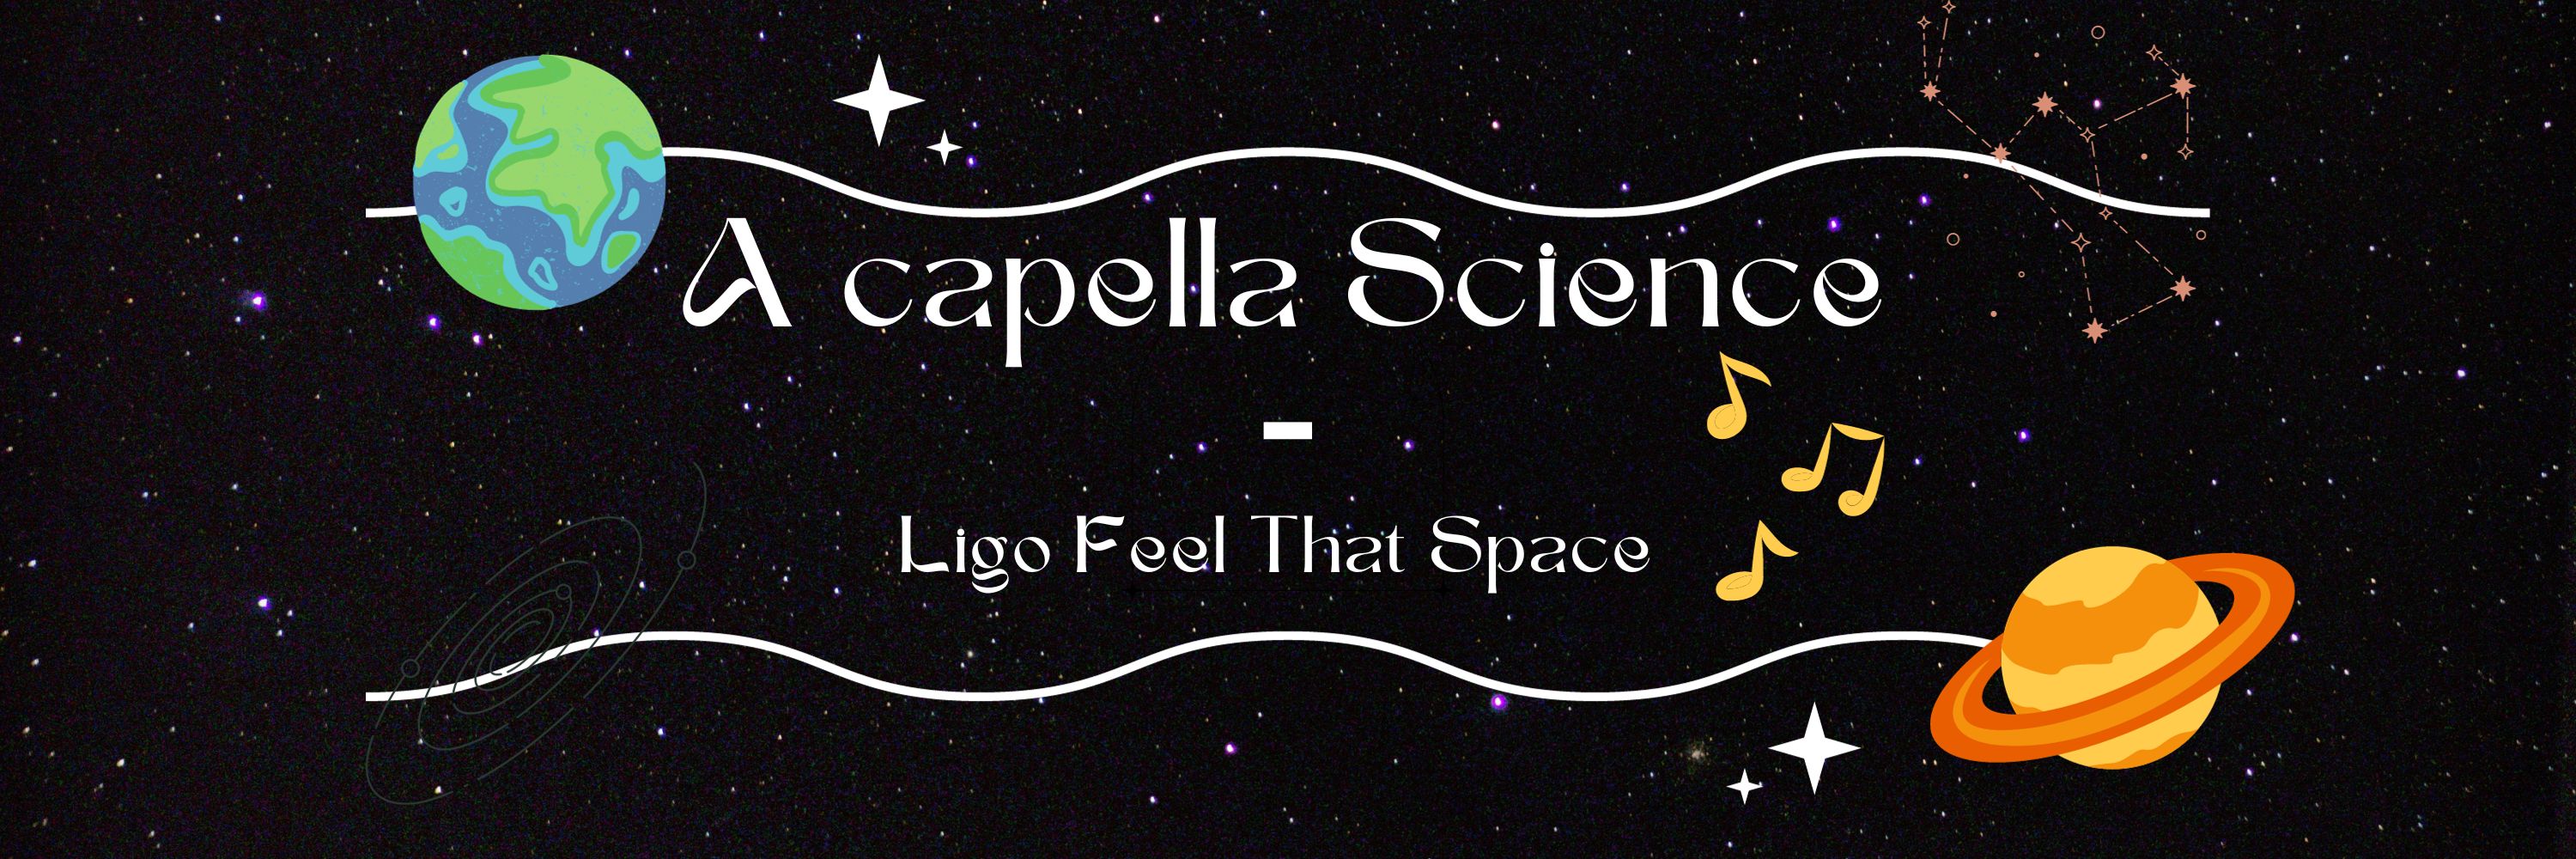 A capella Science - Ligo Feel That Space.